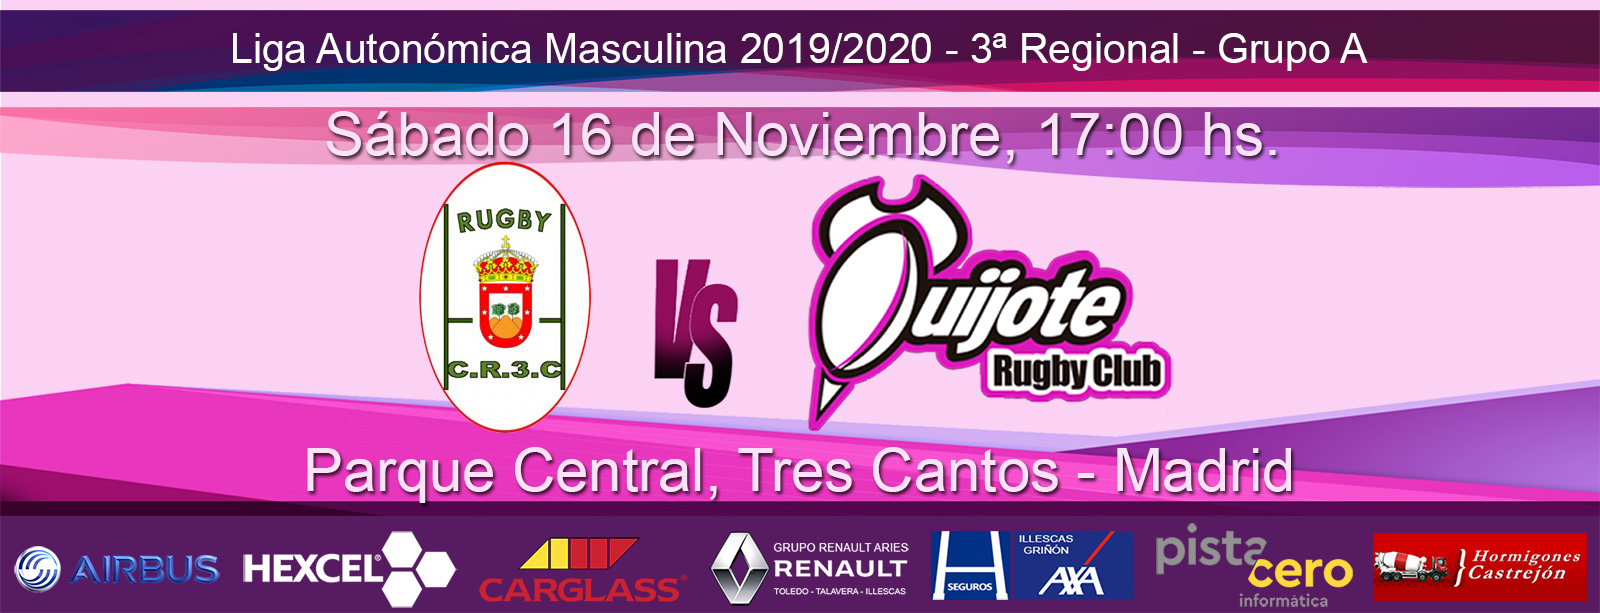 Club de Rugby Tres Cantos vs Quijote Rugby Club (16-11-2019)